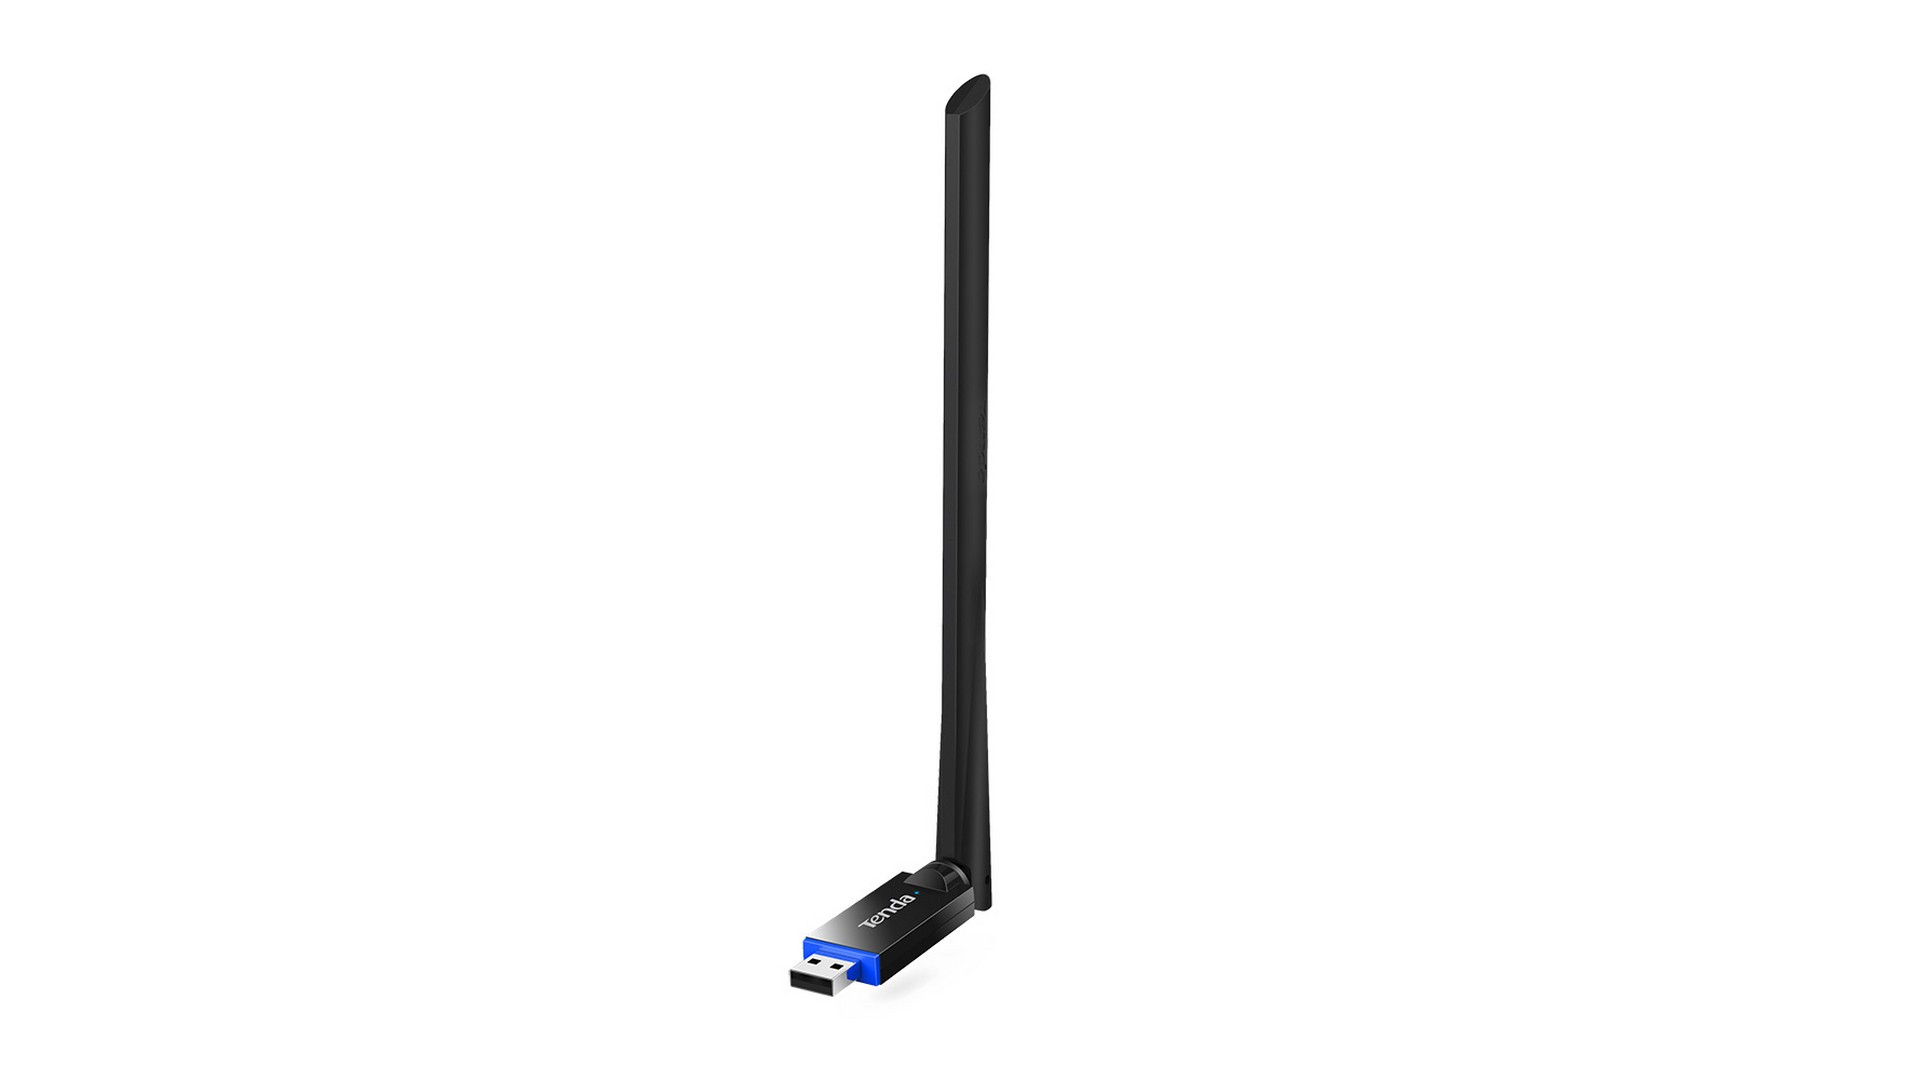 Bộ thu wifi TENDA U10 (AC650) Black